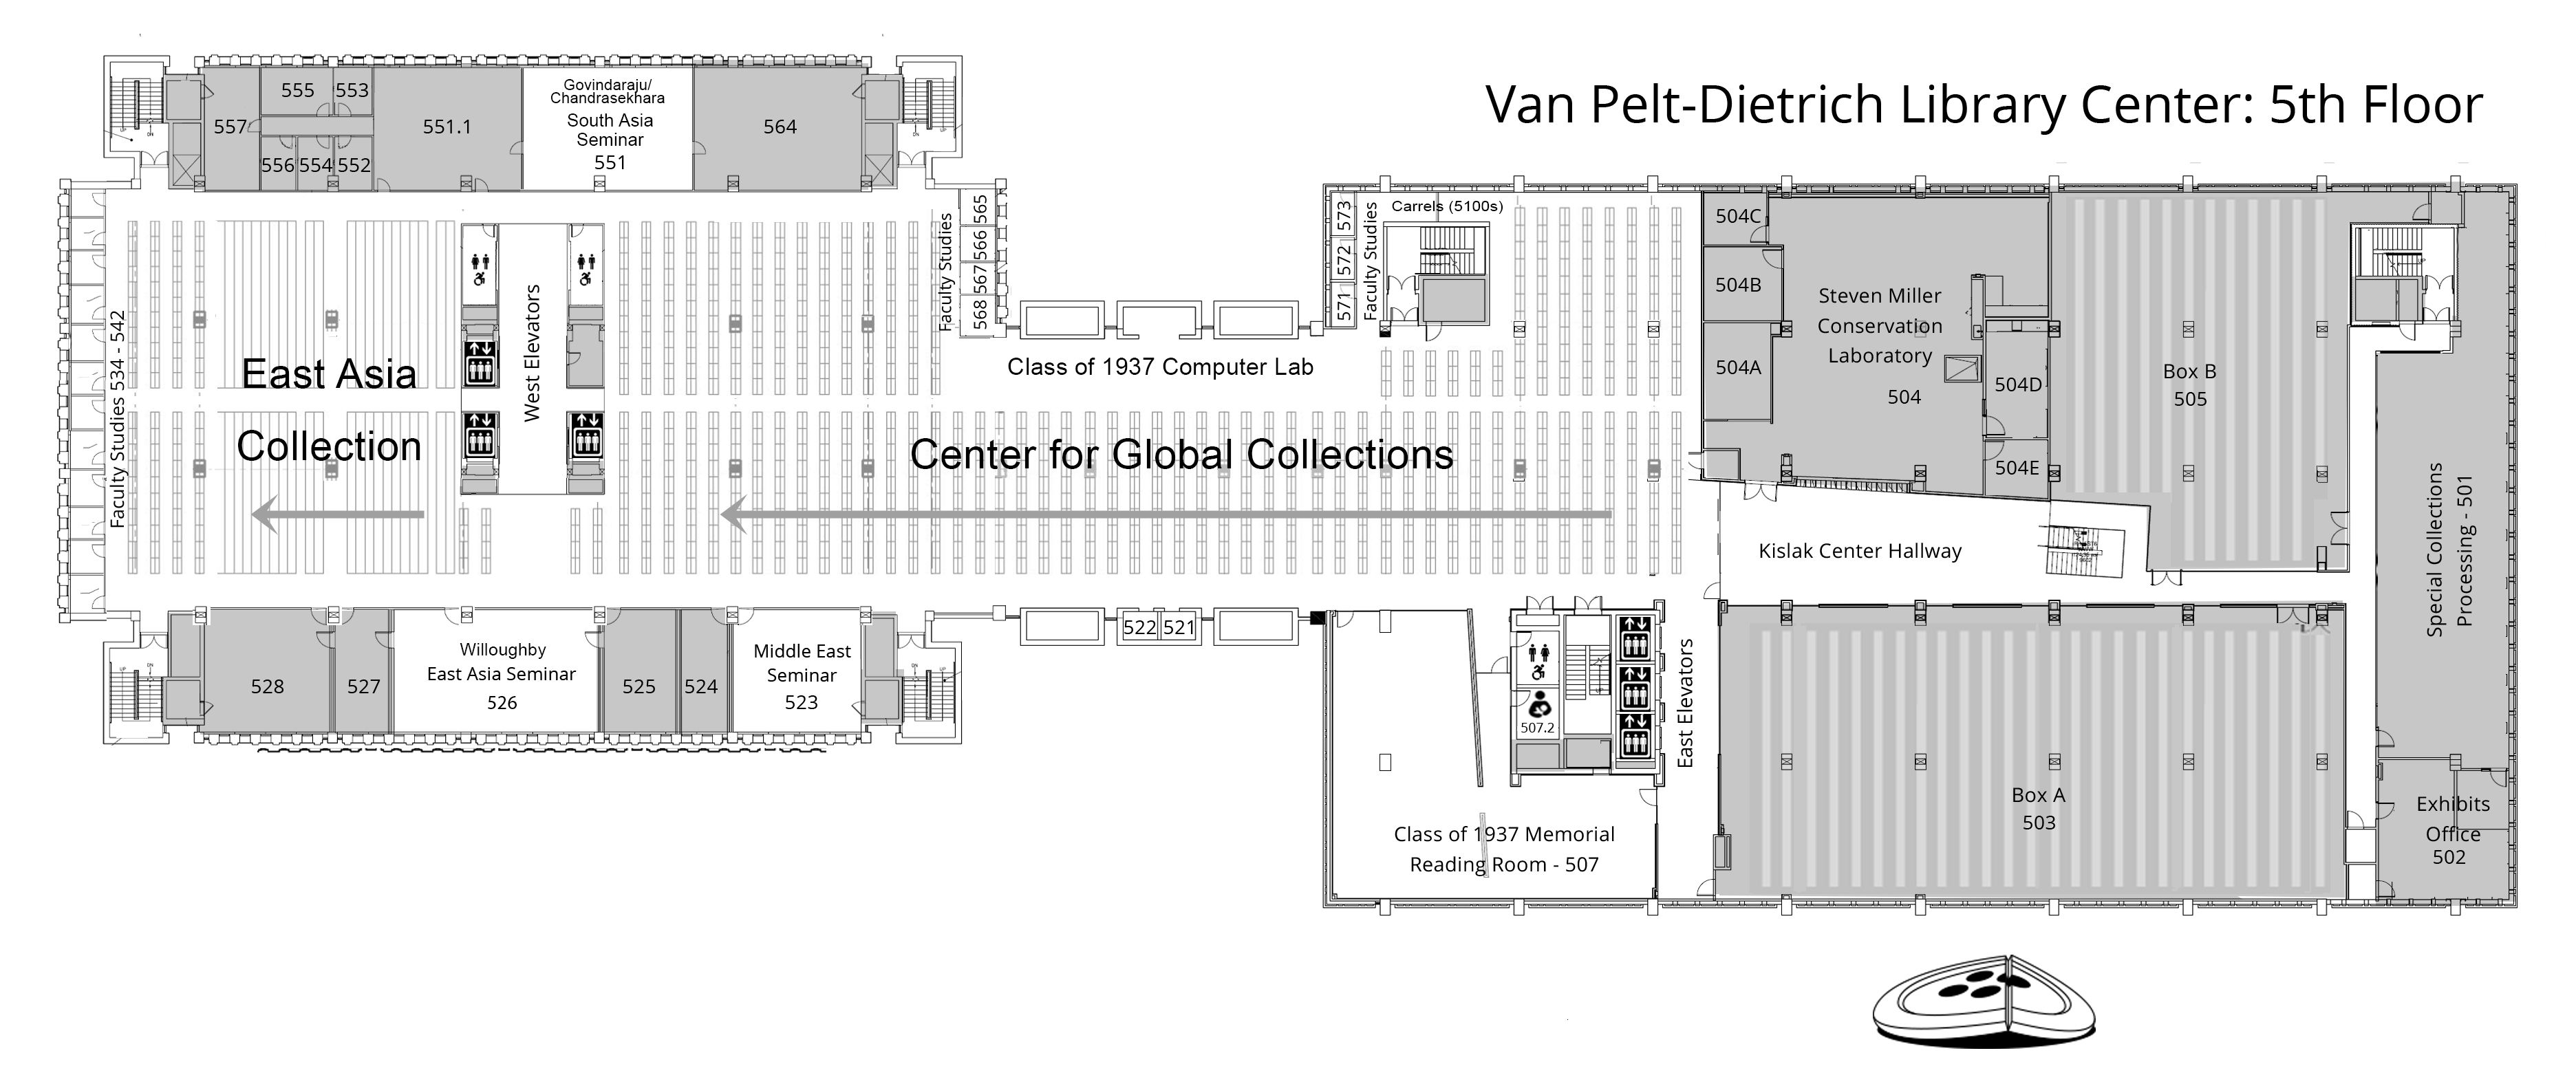 Van Pelt-Dietrich Library Center, fifth floor plan